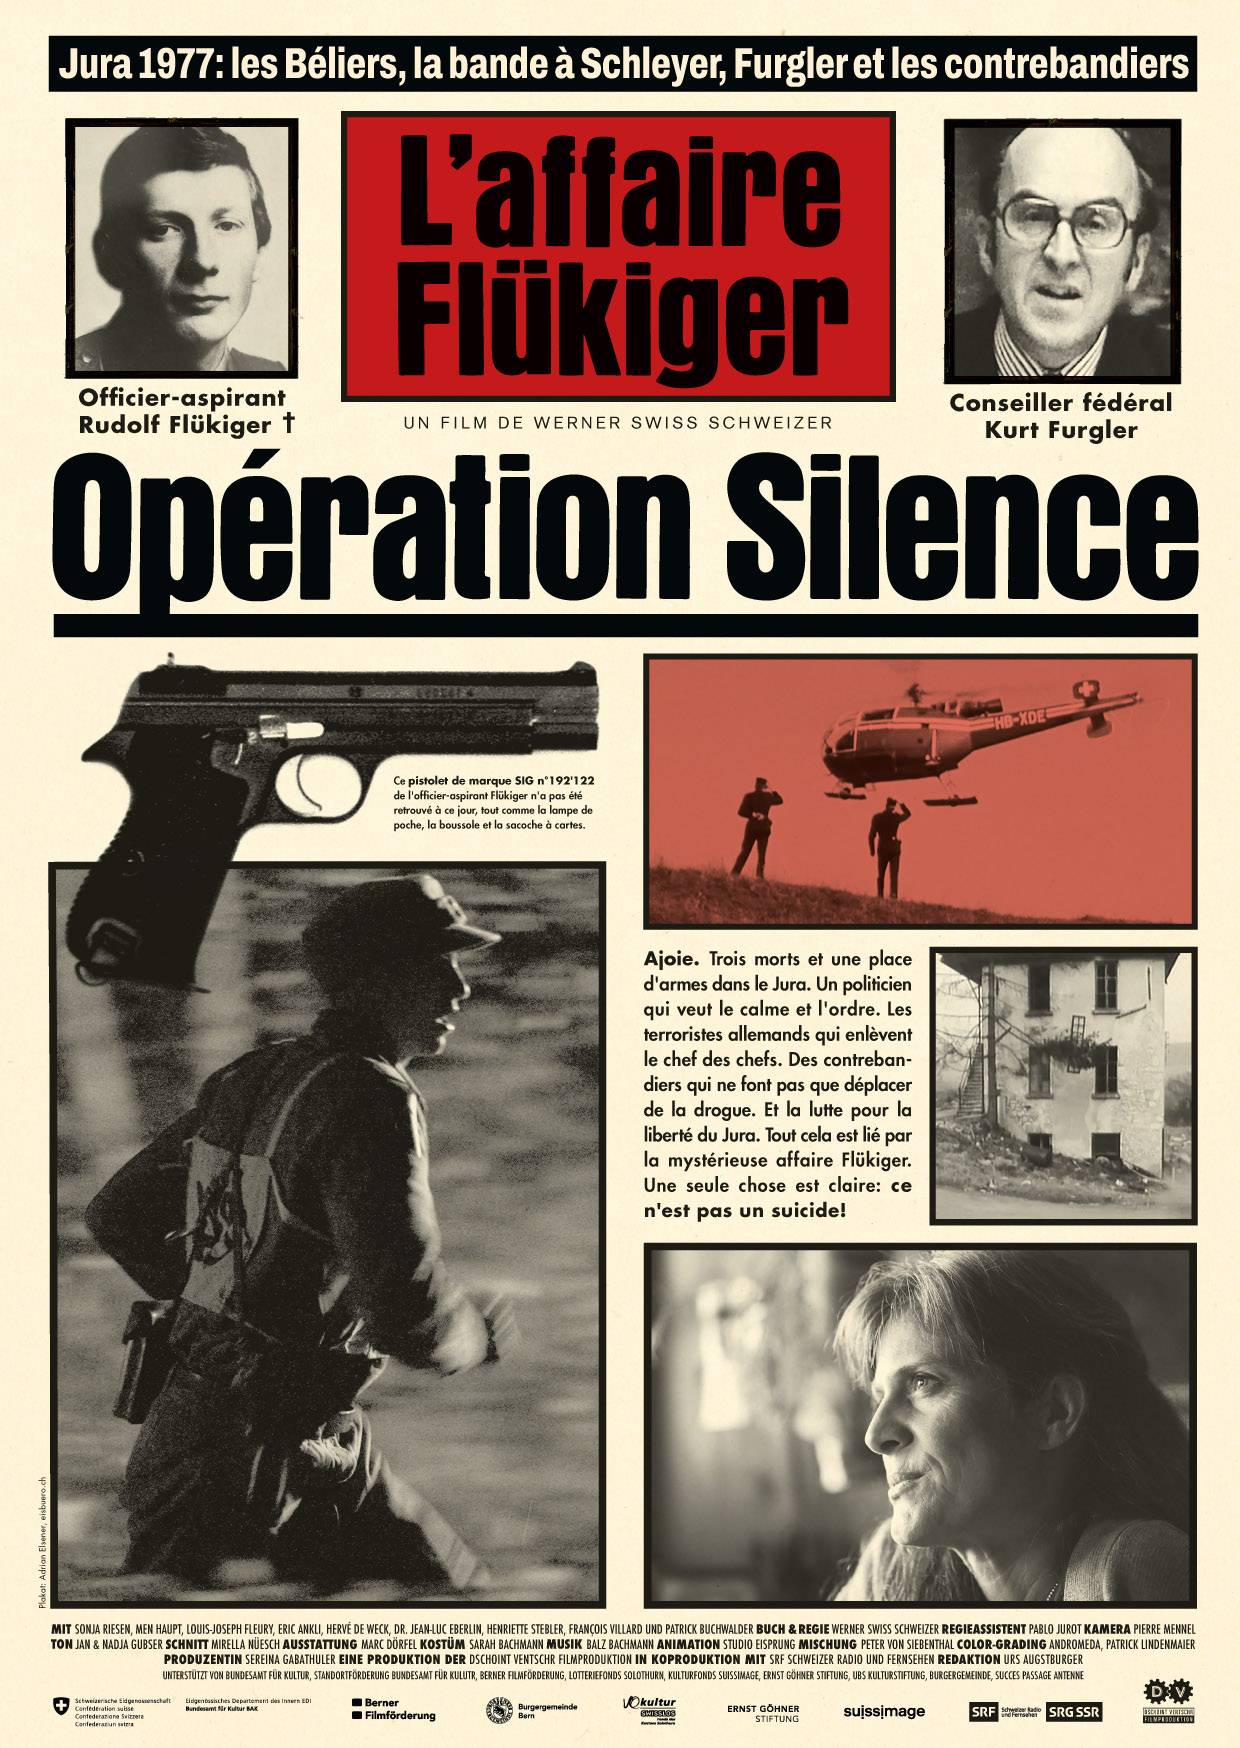 Opération silence - l'affaire Flükiger